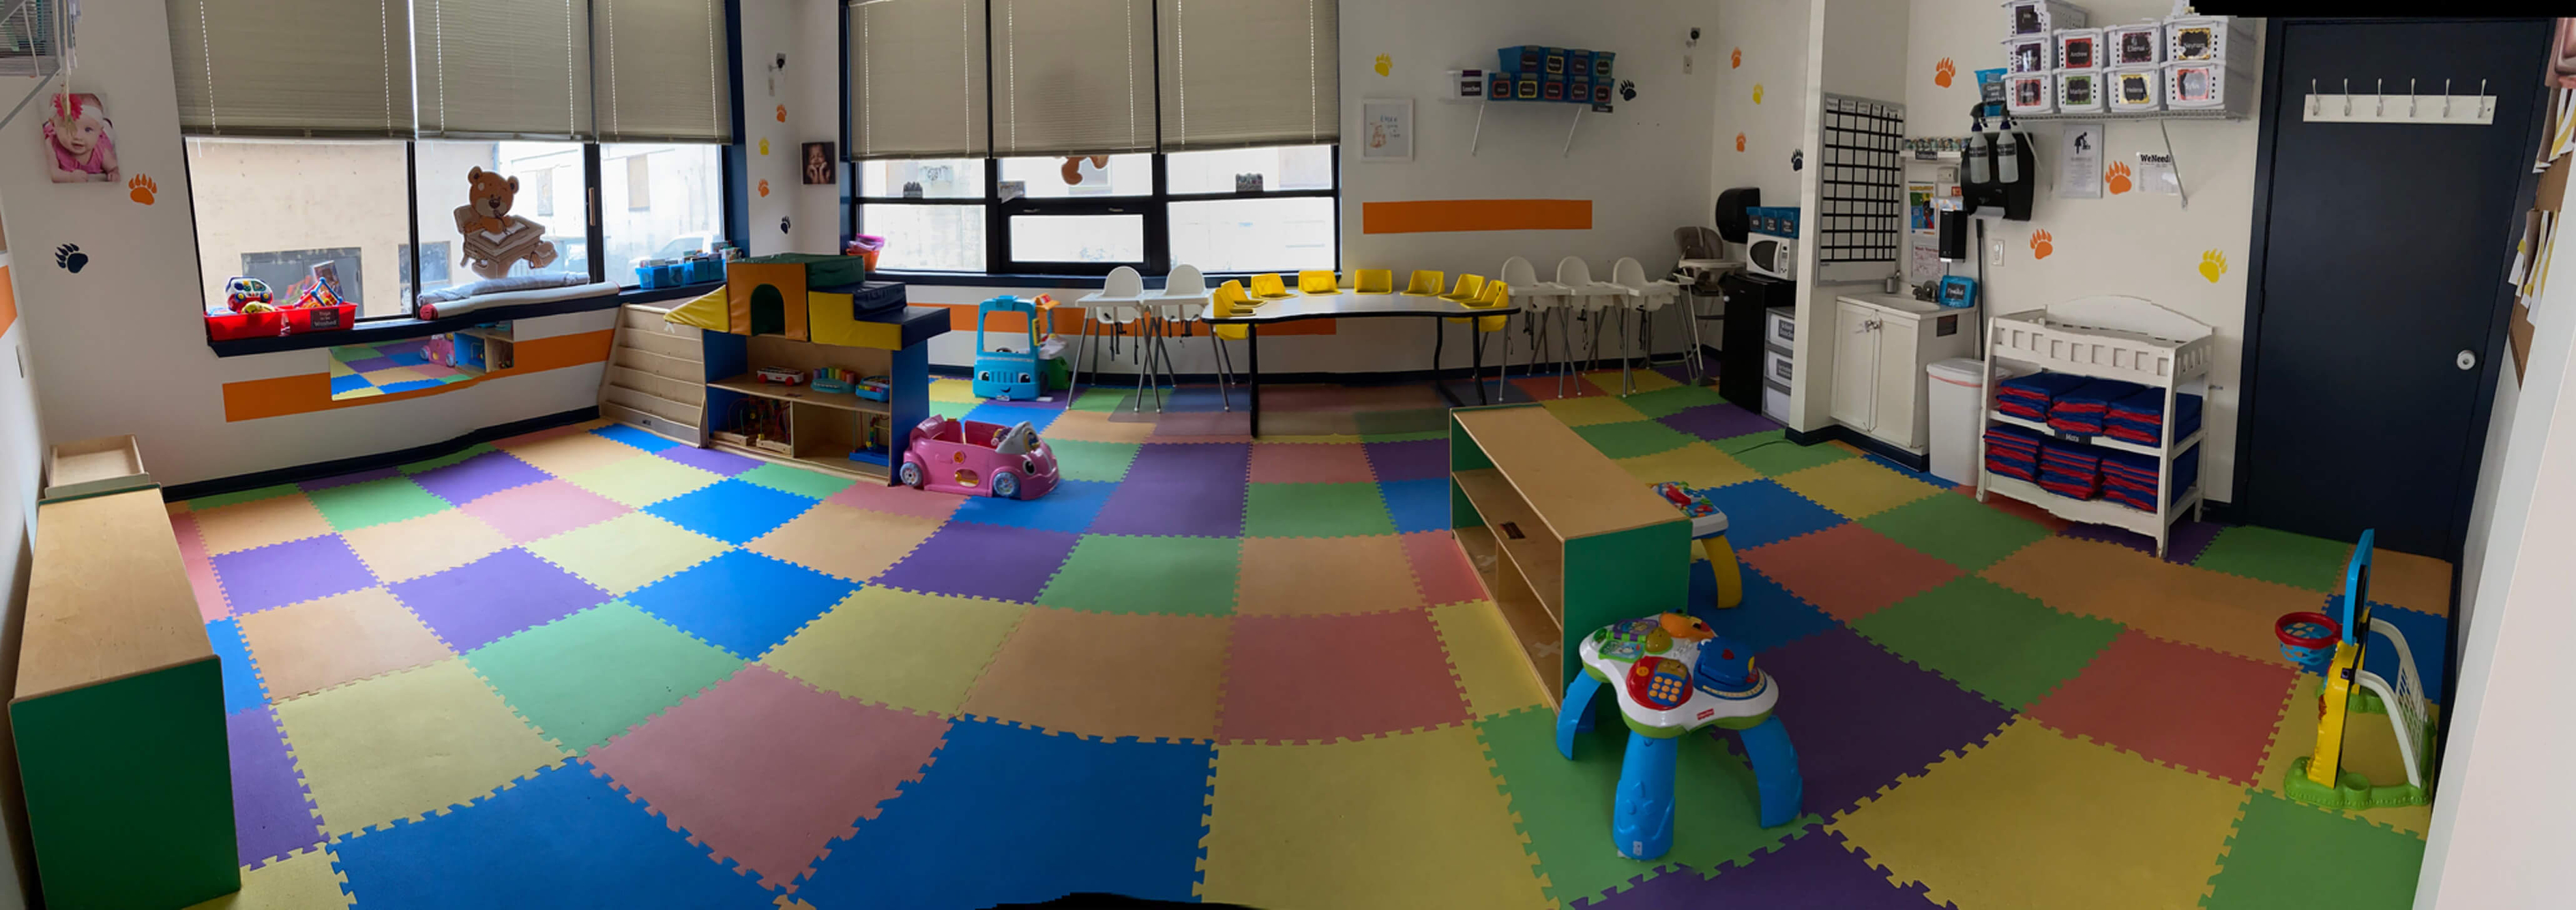 Interior area of The Teddy Bear Village child care center